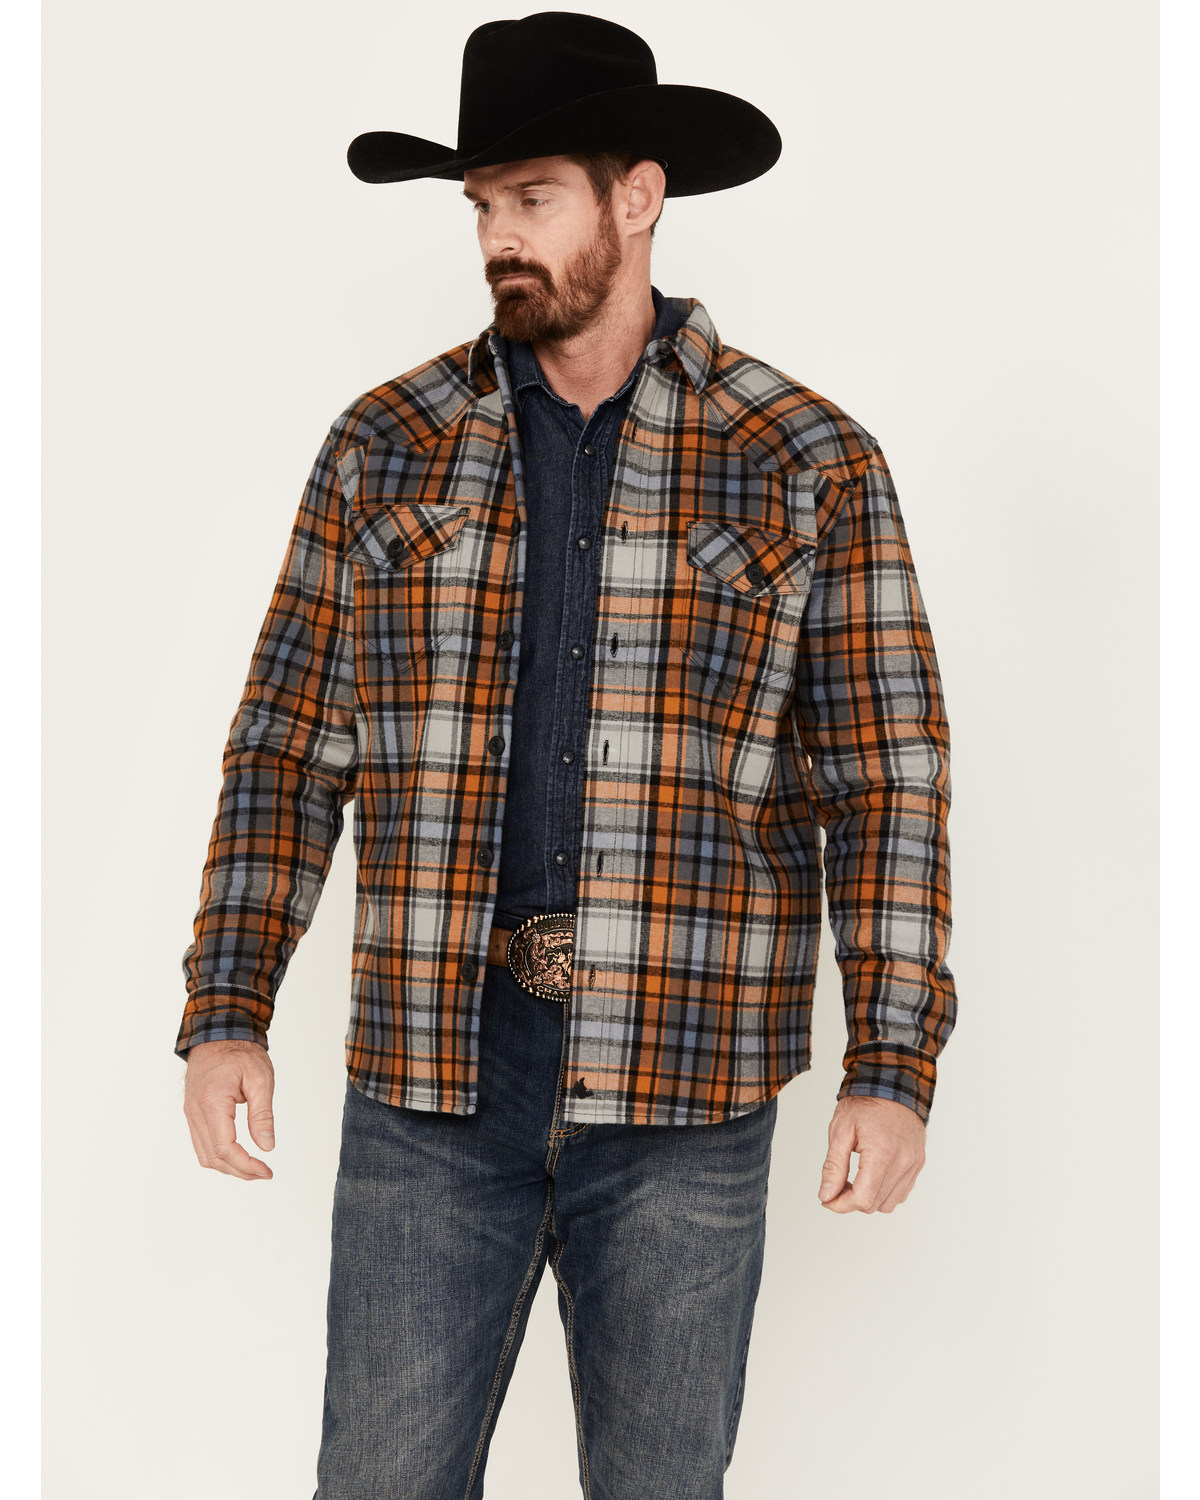 Cody James Men's Plaid Long Sleeve Button-Down Shirt Jacket